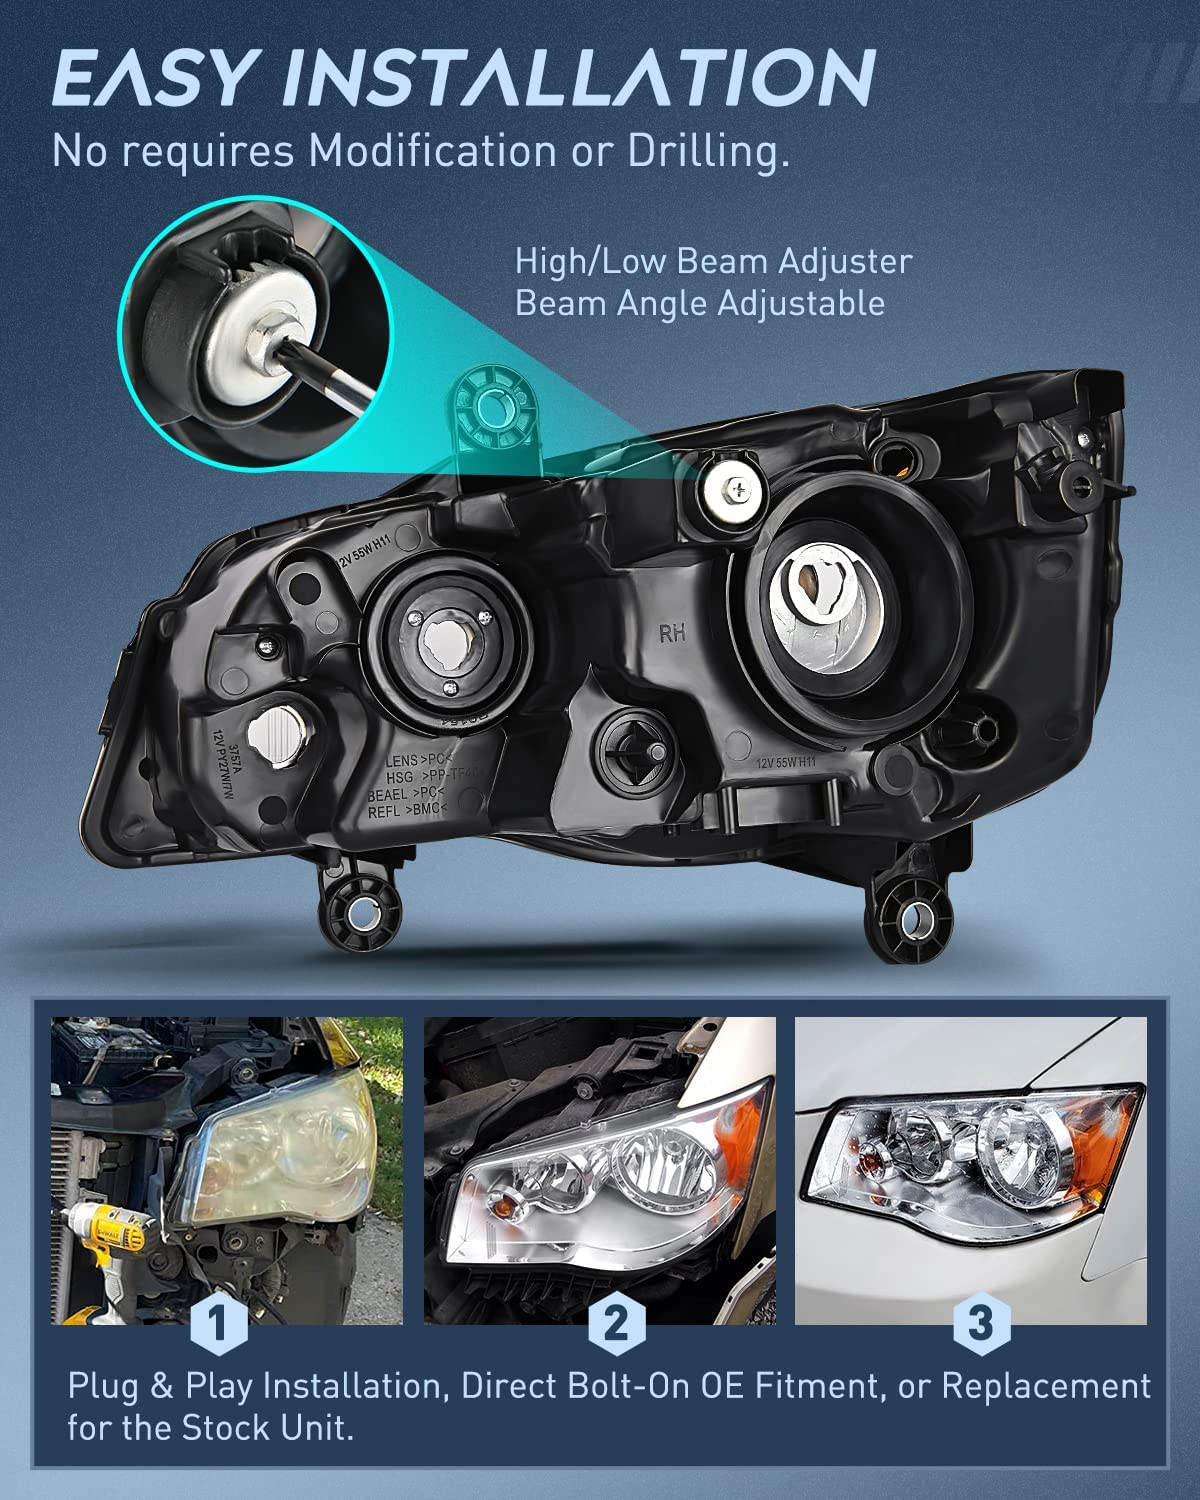 2011-2019 Dodge Grand Caravan 2008-2016 Chrysler Town Country Headlight Assembly Chrome Case Amber Reflector Nilight